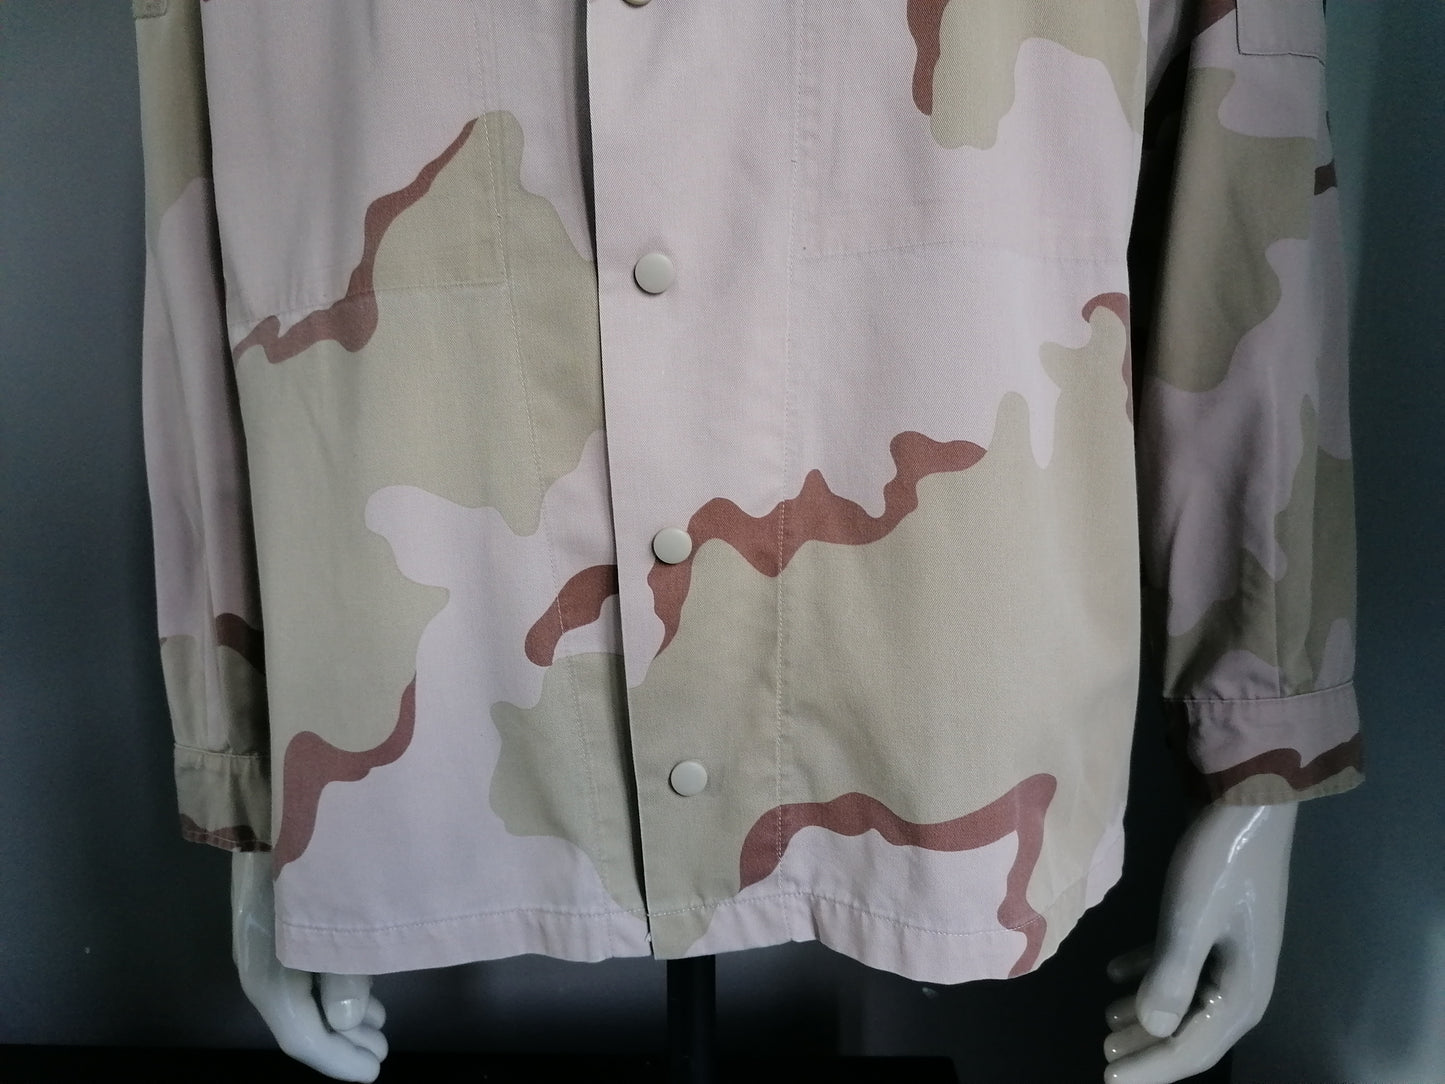 Vintage Army / Army shirt (2004). Desert Camouflage print. Size XL. Original